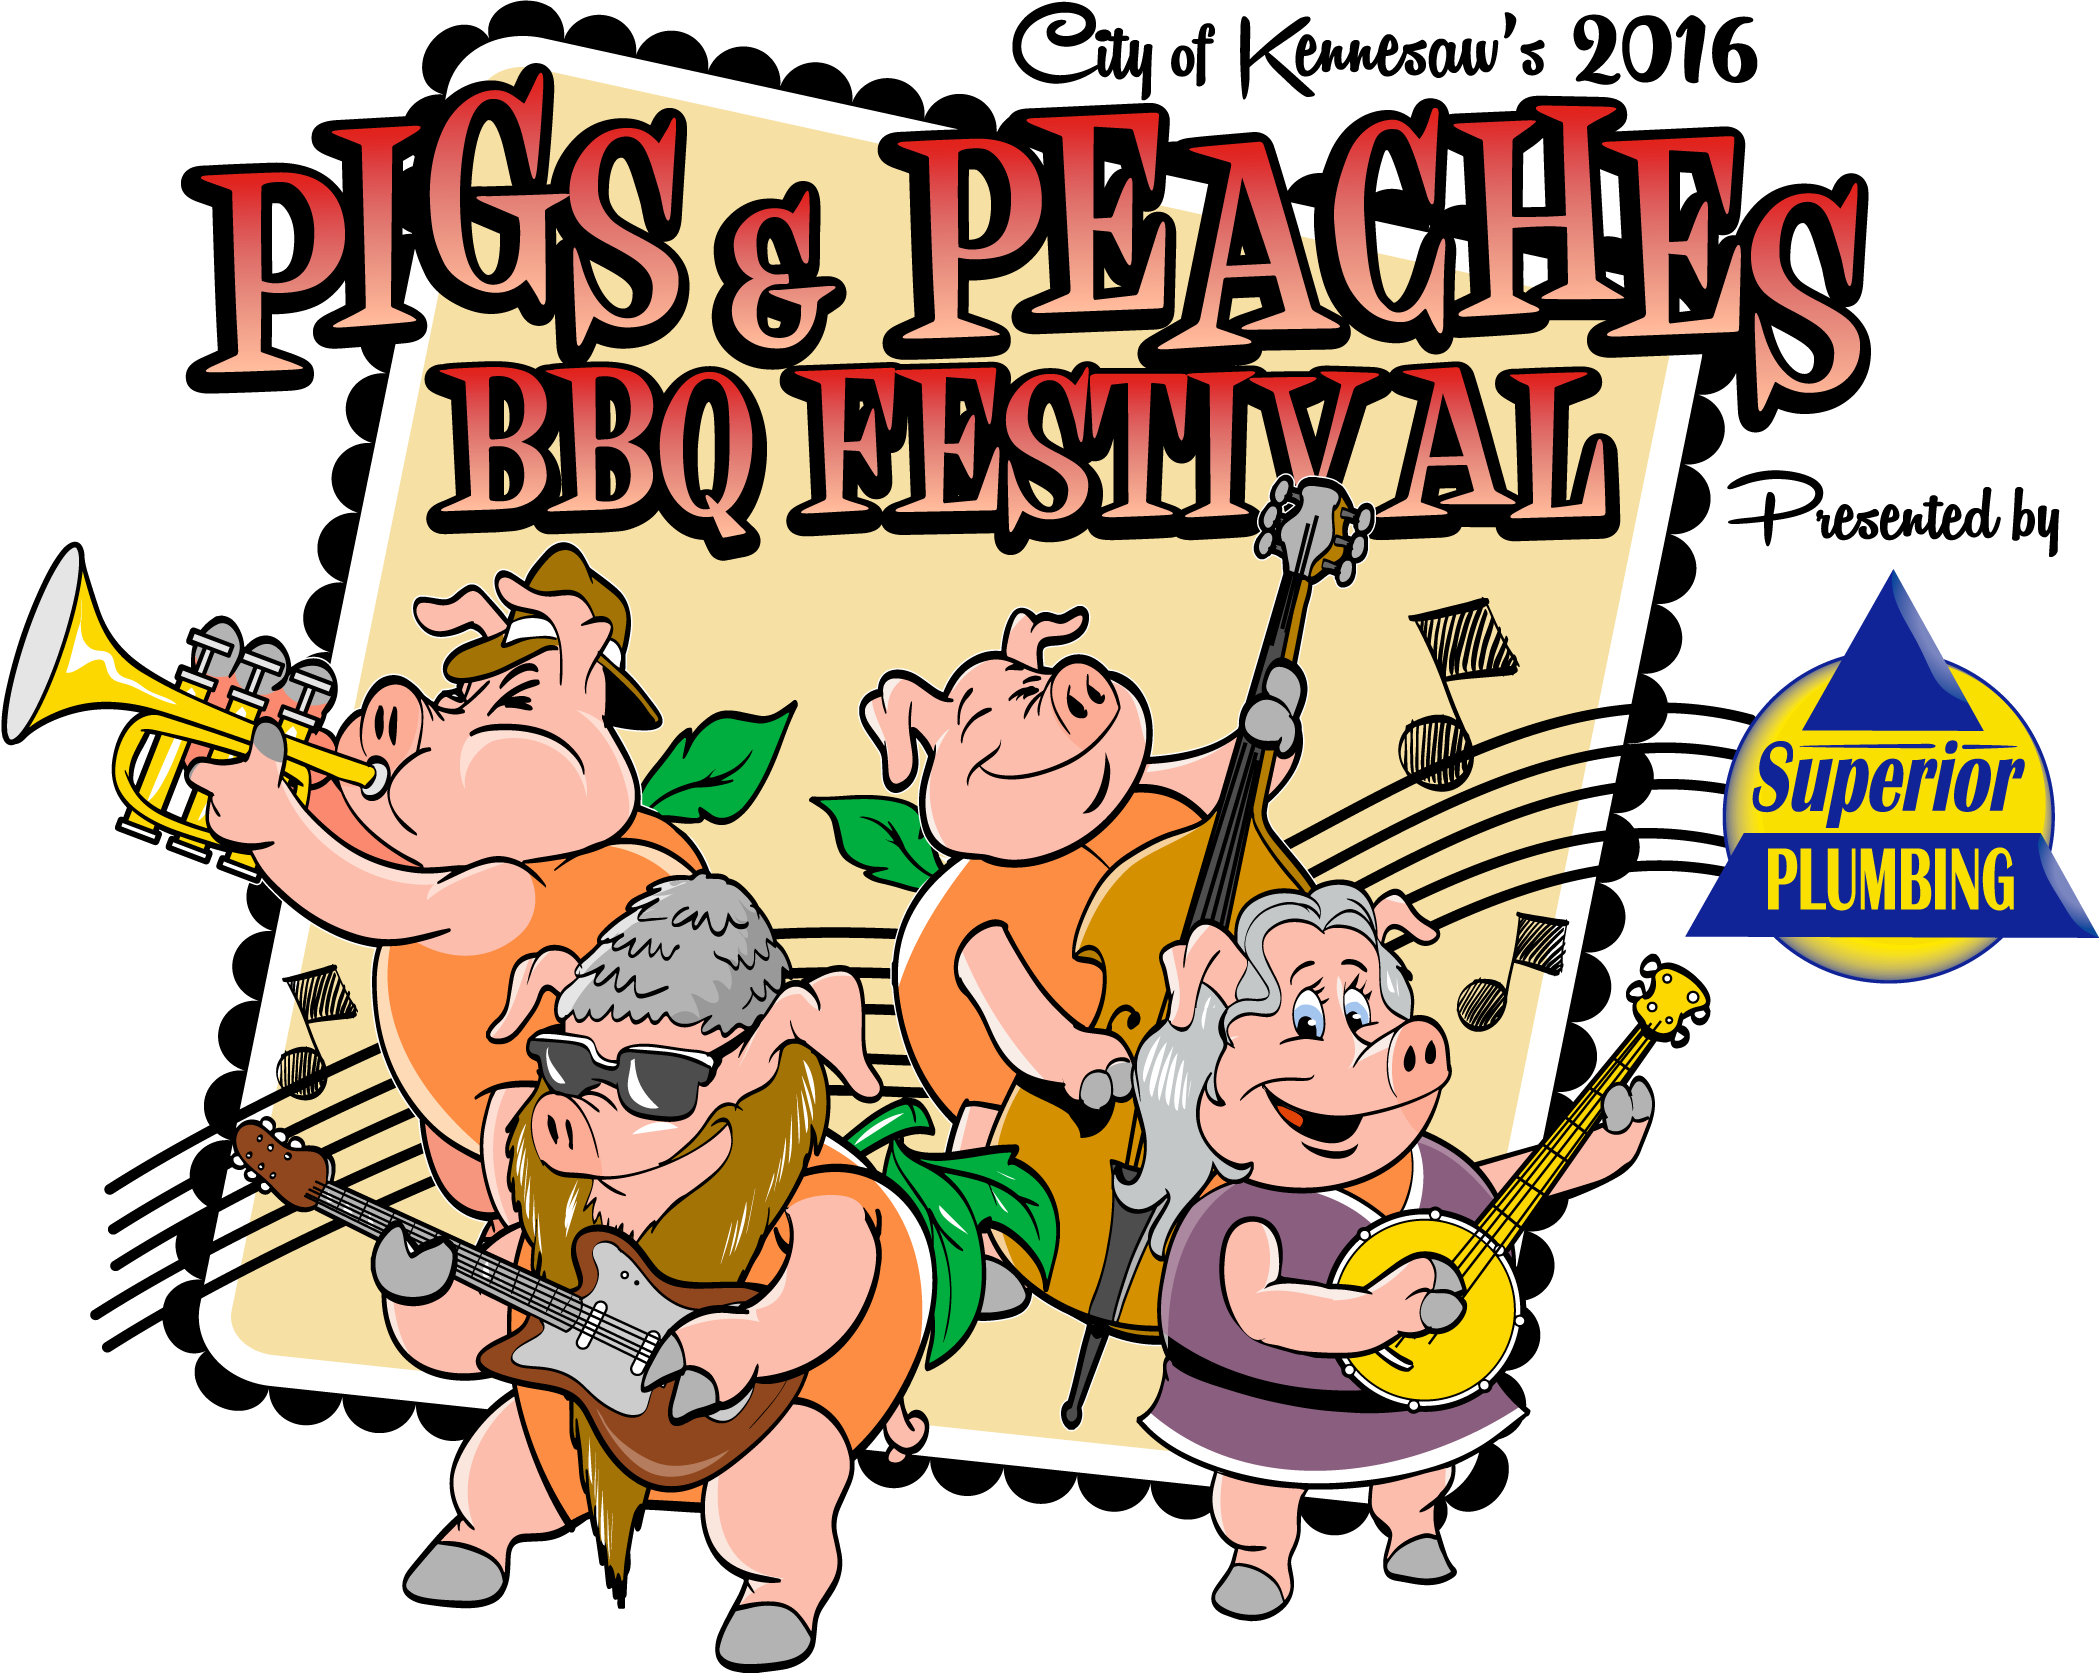 City Of Kennesaw Bbq Festival Returns August 26-27 - Pigs & Peaches Bbq Festival (2099x1673)